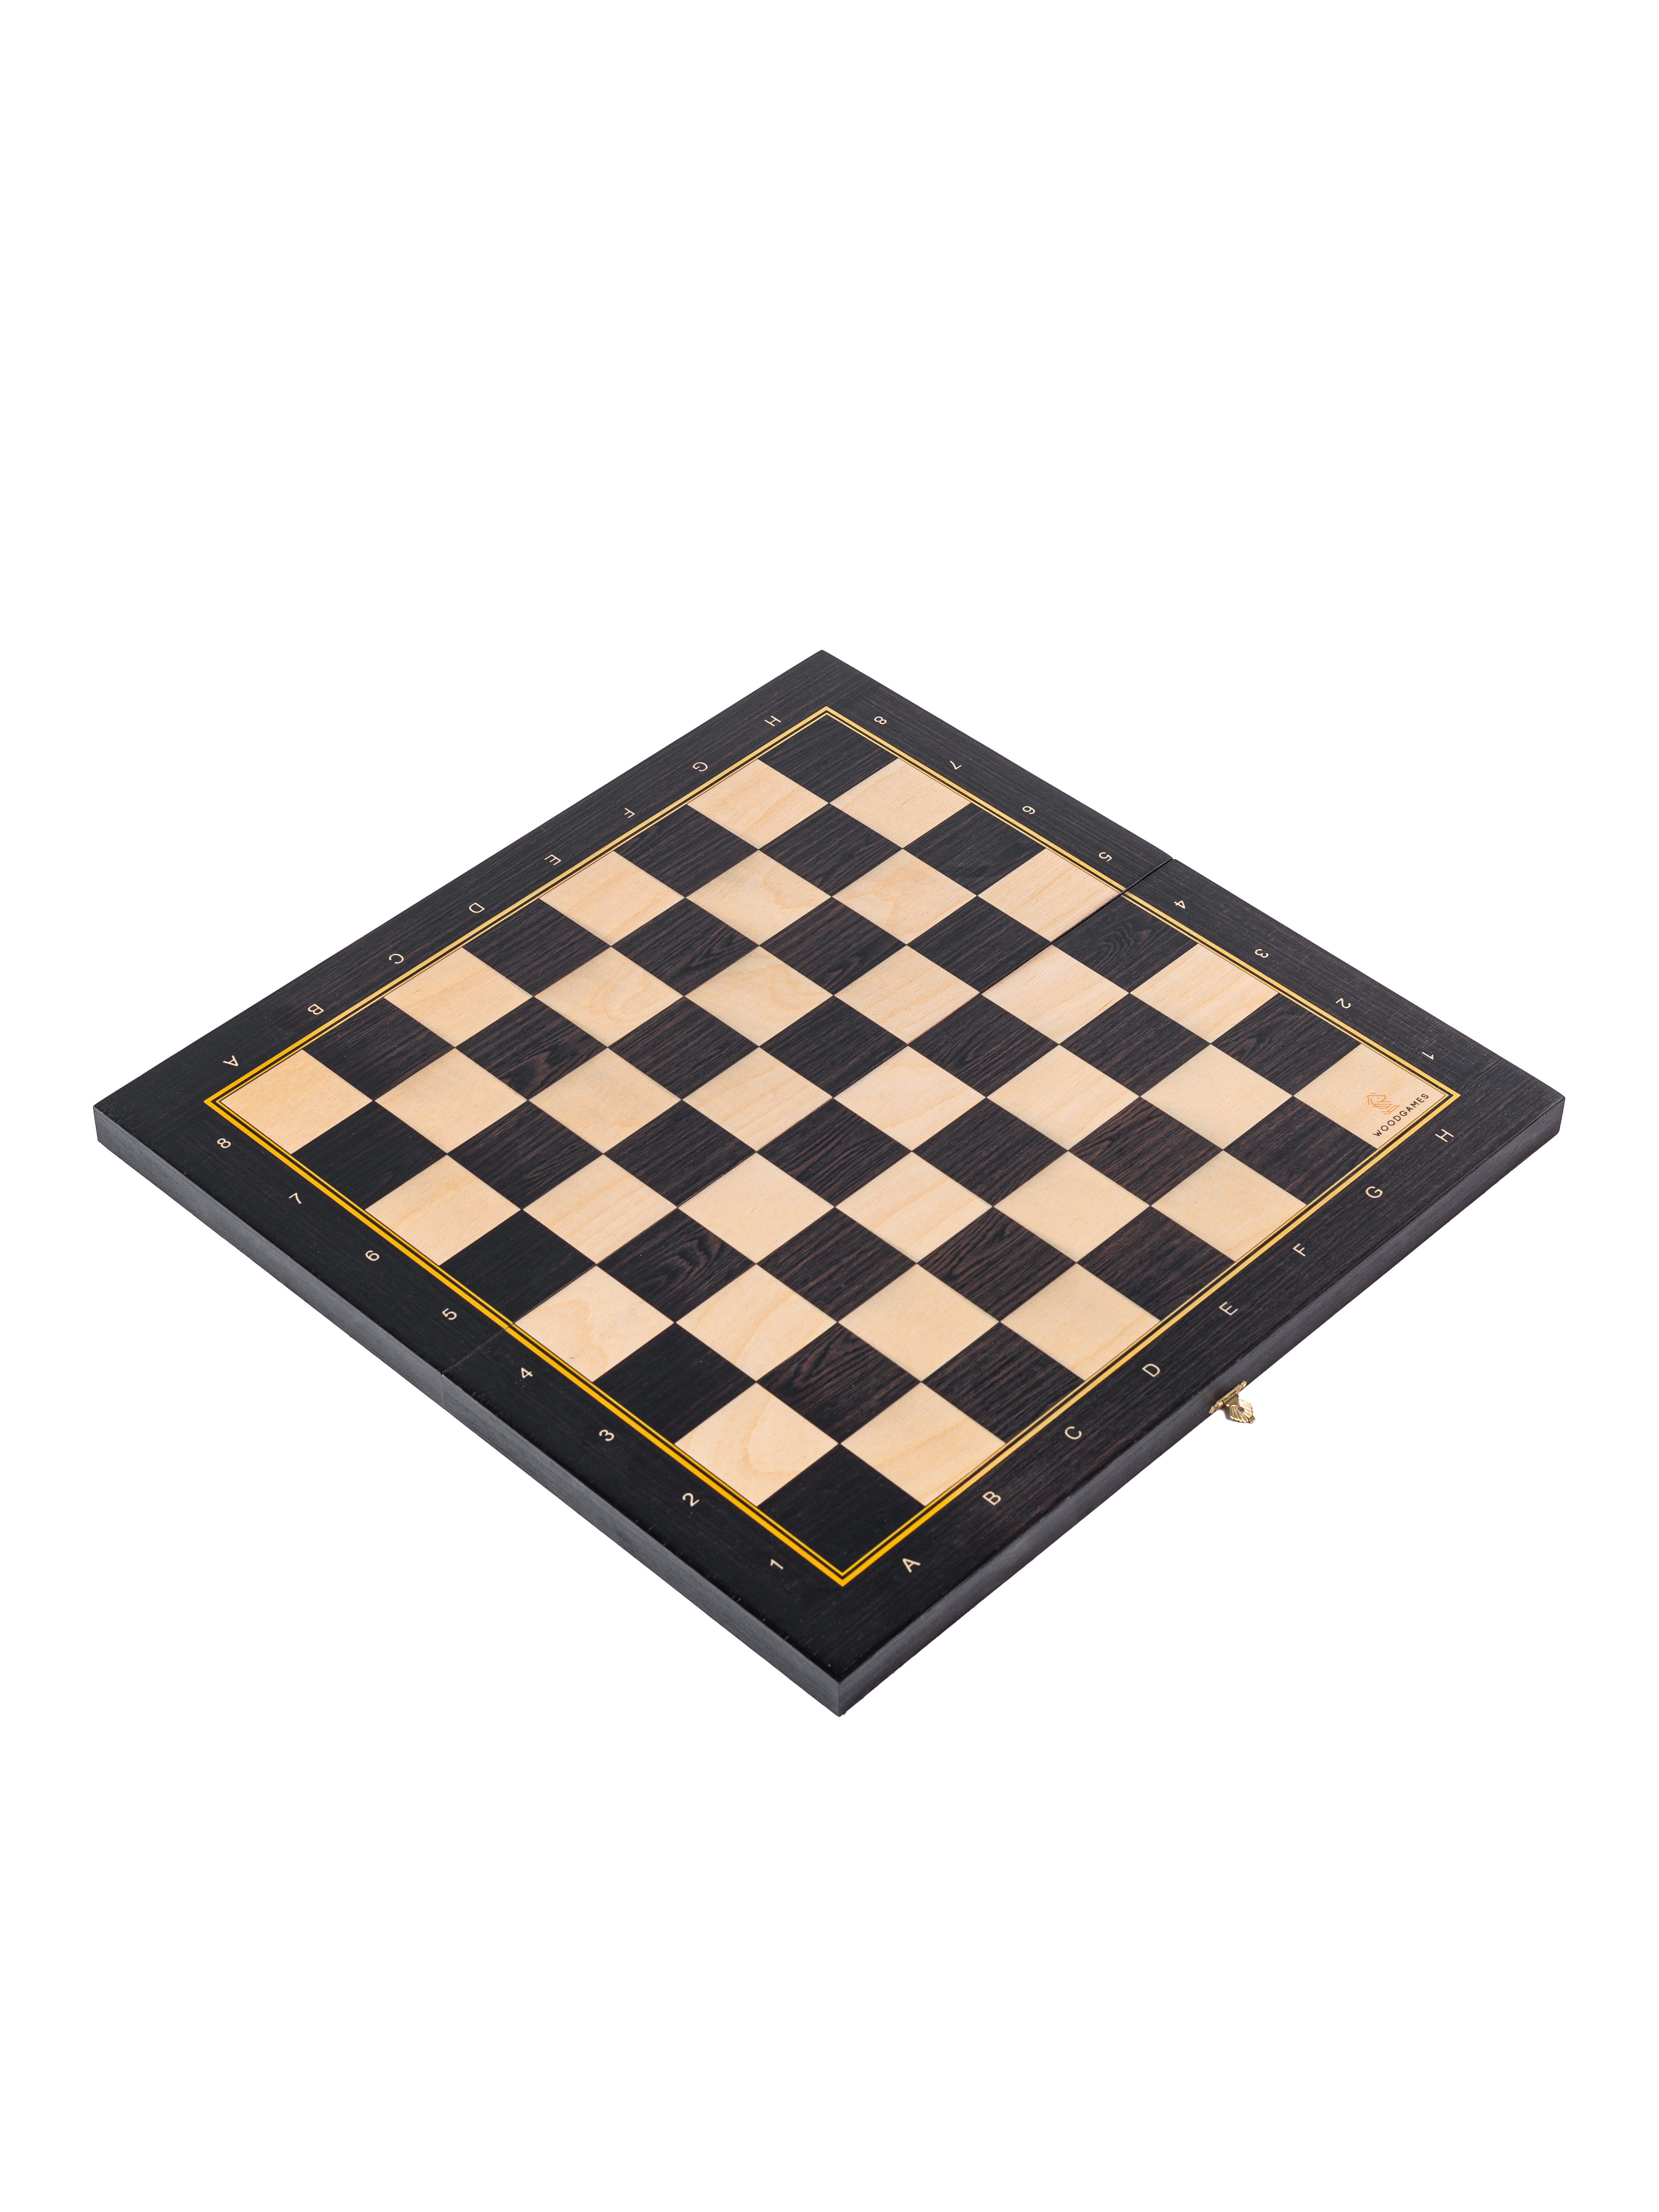 Шахматная доска Lavochkashop Авангард венге большая без фигур шахматная доска обиходная 29 х 29 х 3 5 см